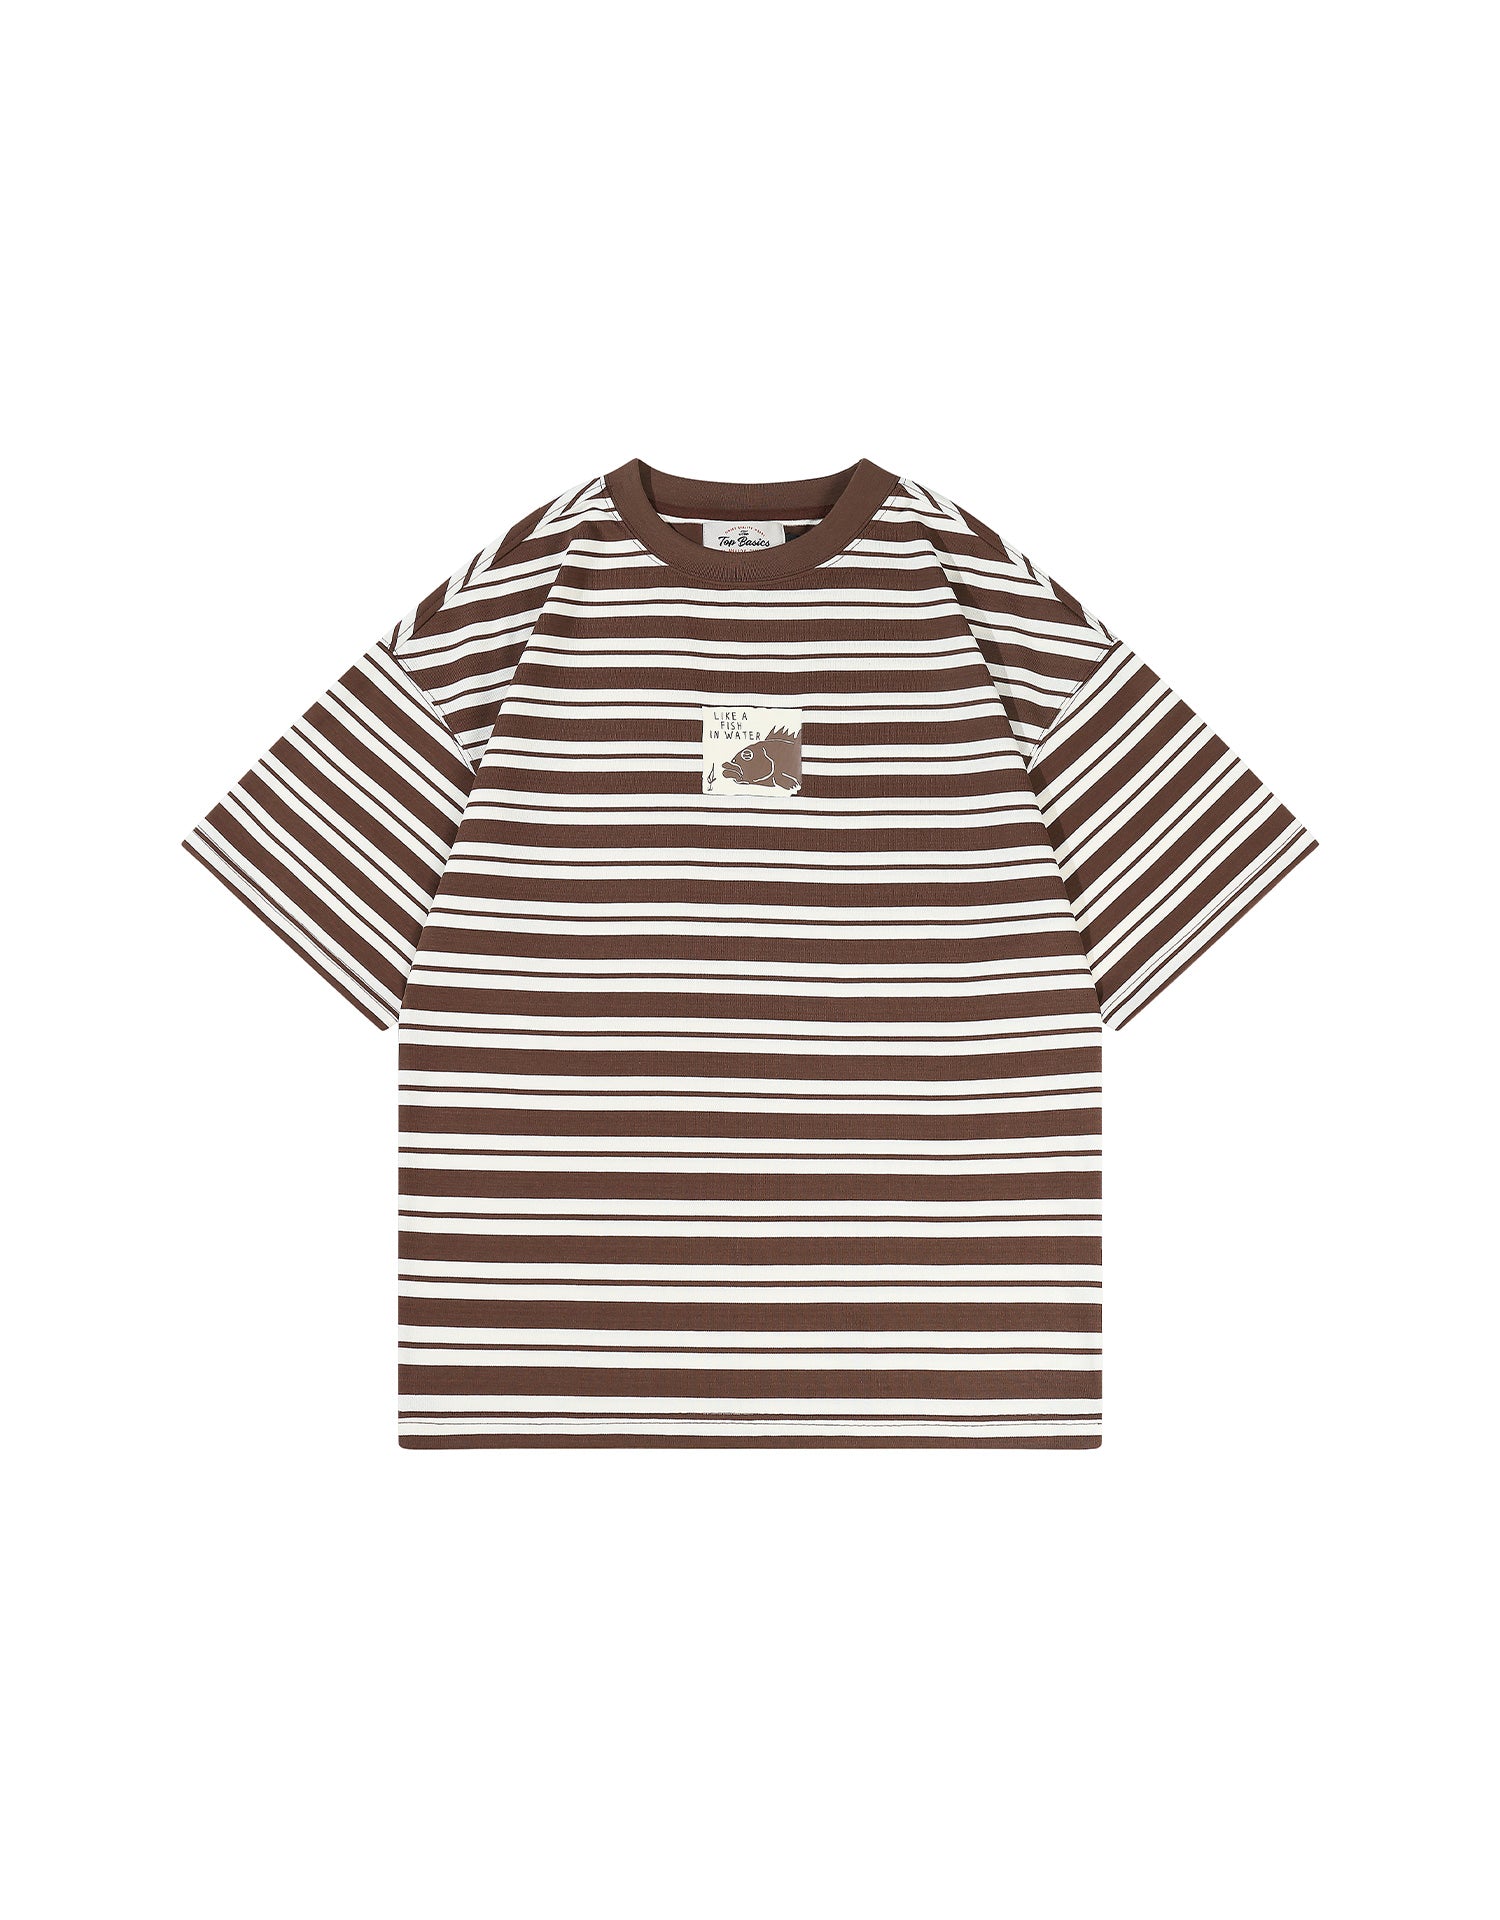 TopBasics Printed Striped T-Shirt